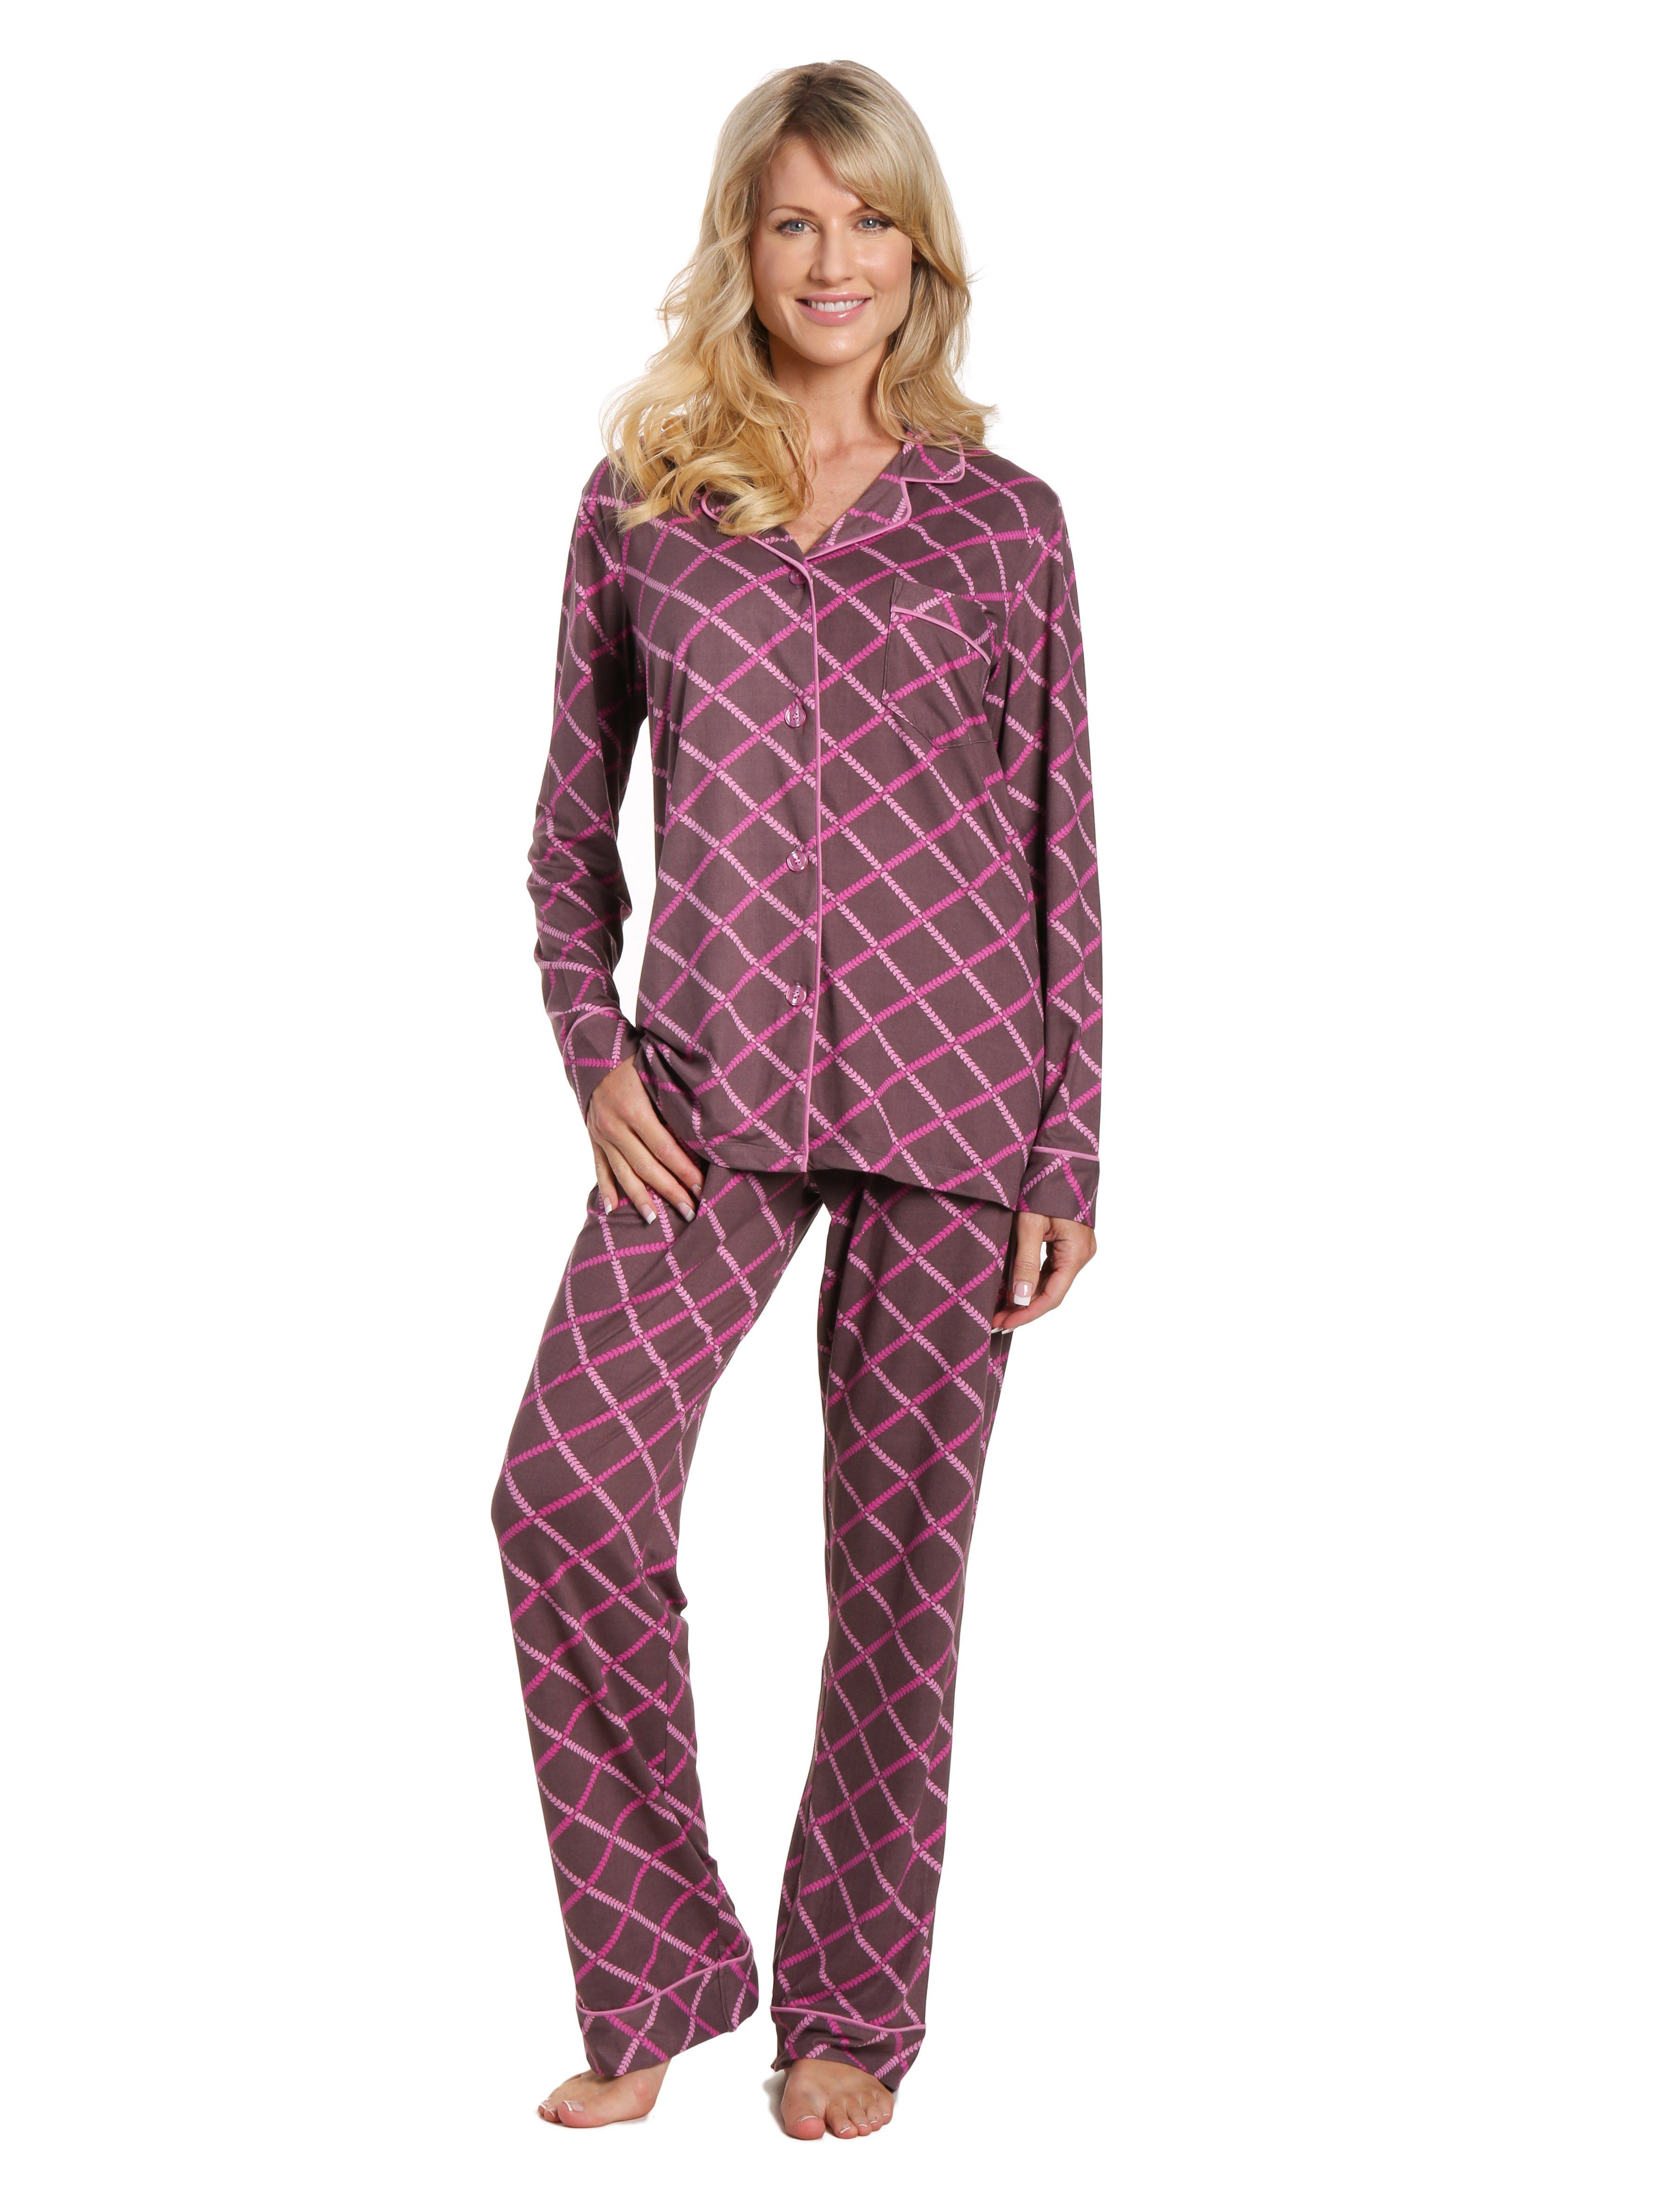 Women's Butter Soft Knit Pajama Sleepwear Set